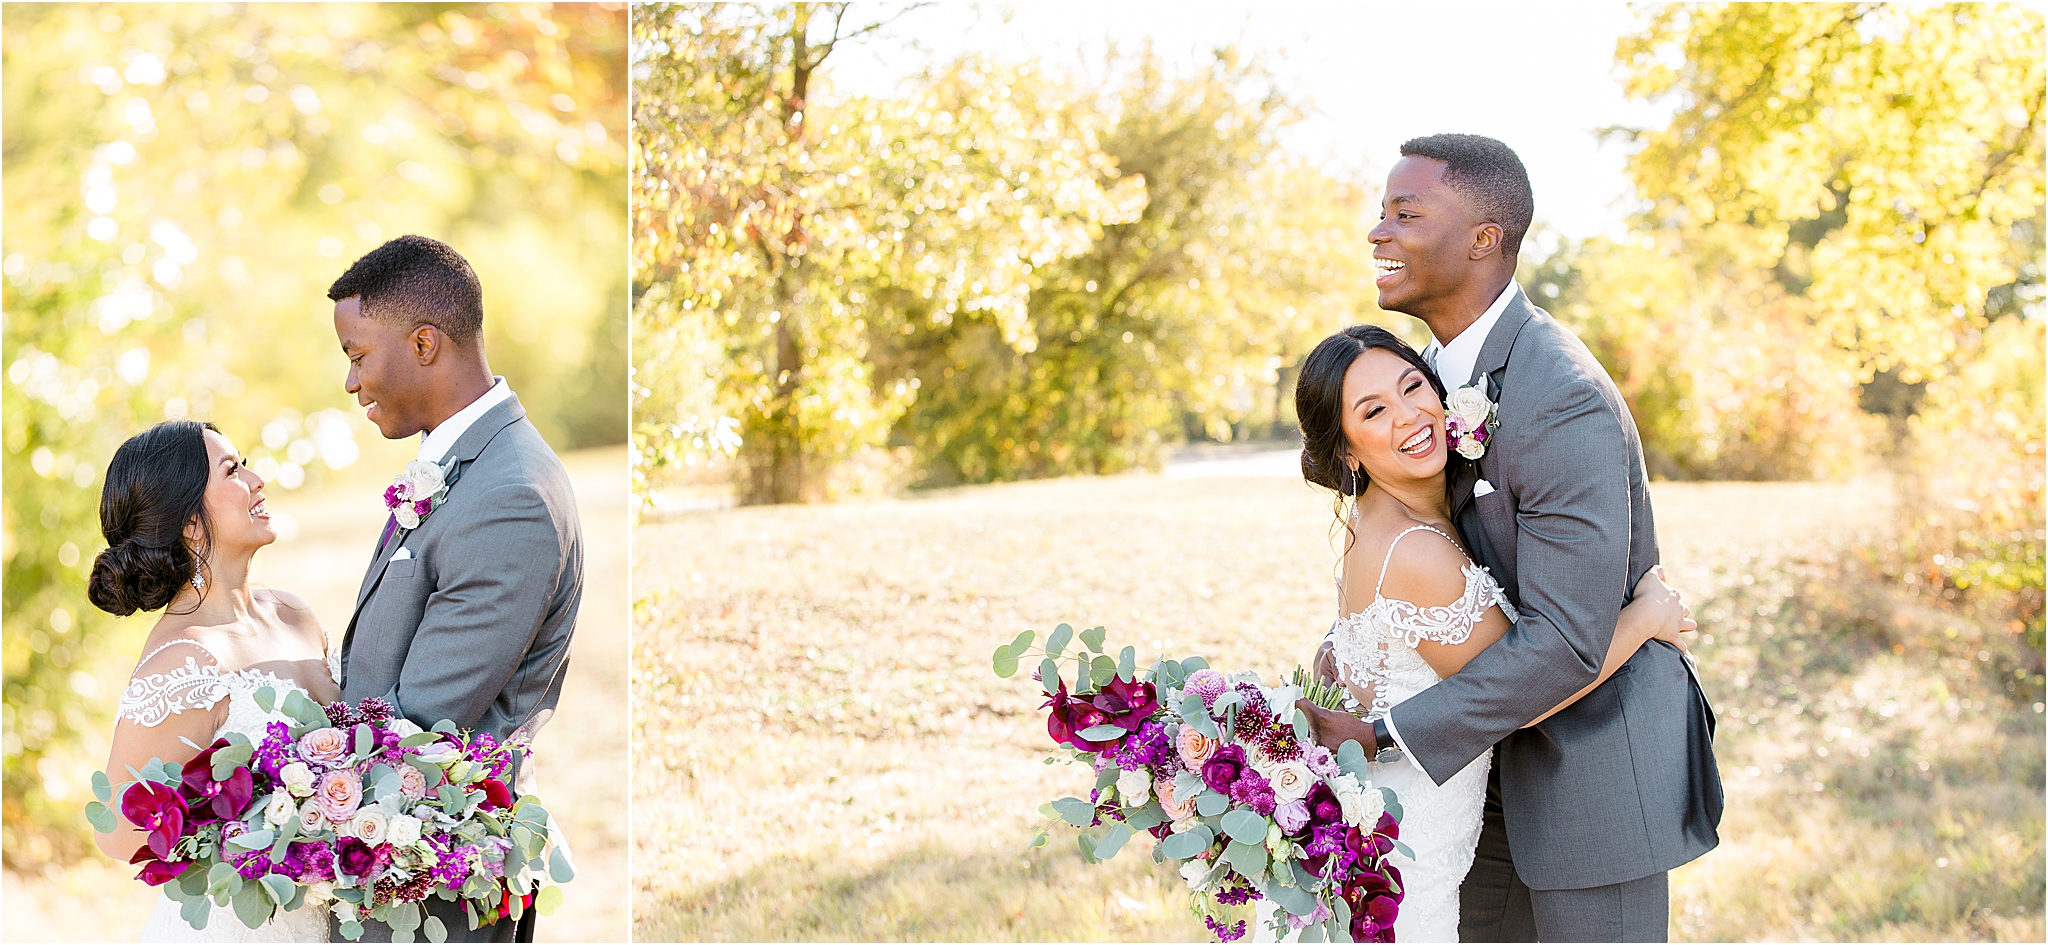 Vibrant, Fall Wedding Portraits in McKinney, Texas by Dallas Wedding Photographer Jillian Hogan Photography 